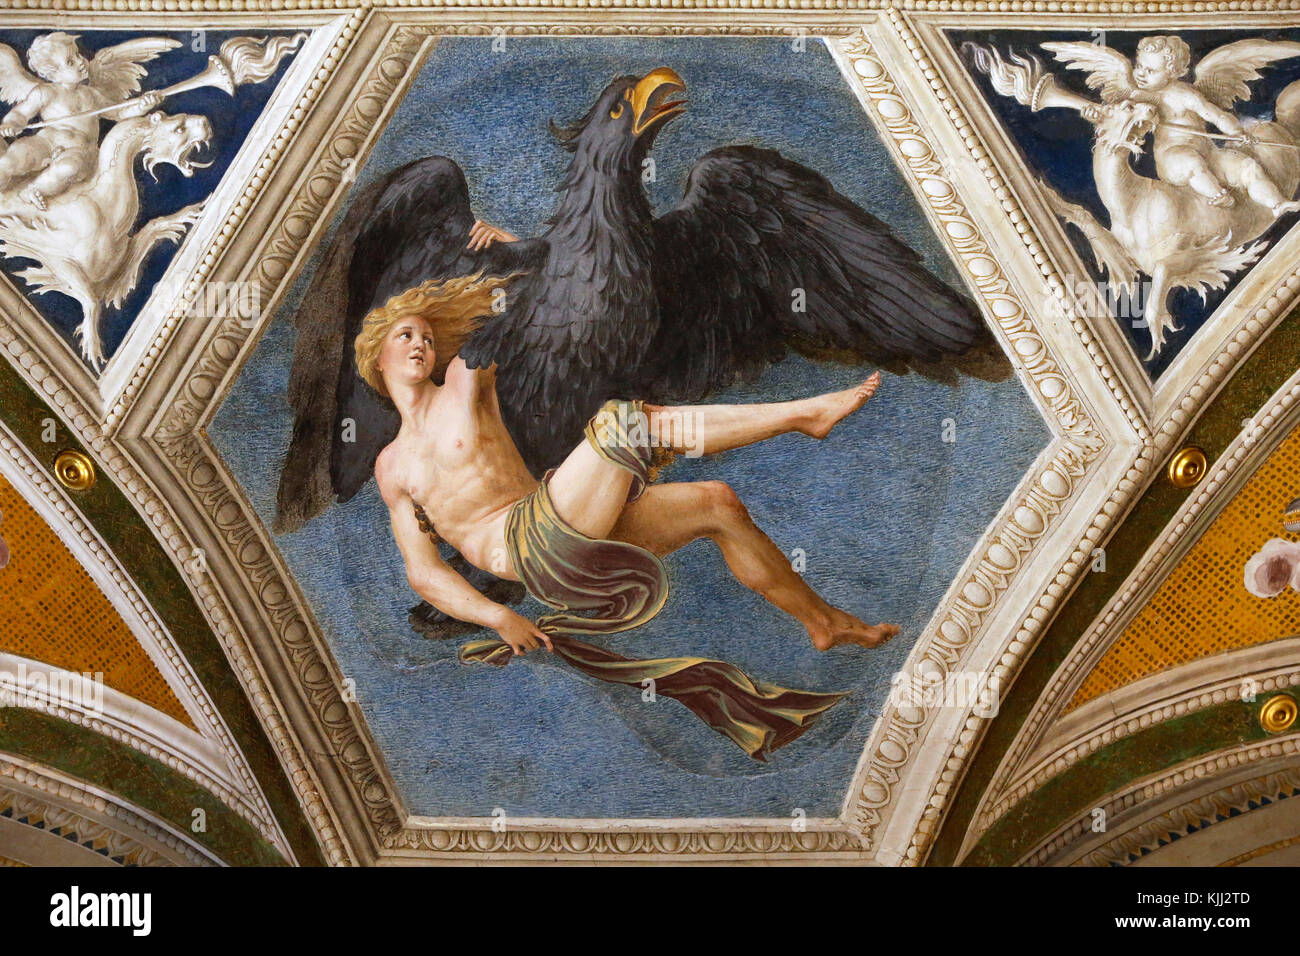 Villa Farnesina, Rome. The Loggia of Galatea. Zodiacal sign of Aquarius represented by the figure of Ganymede. Italy. Stock Photo